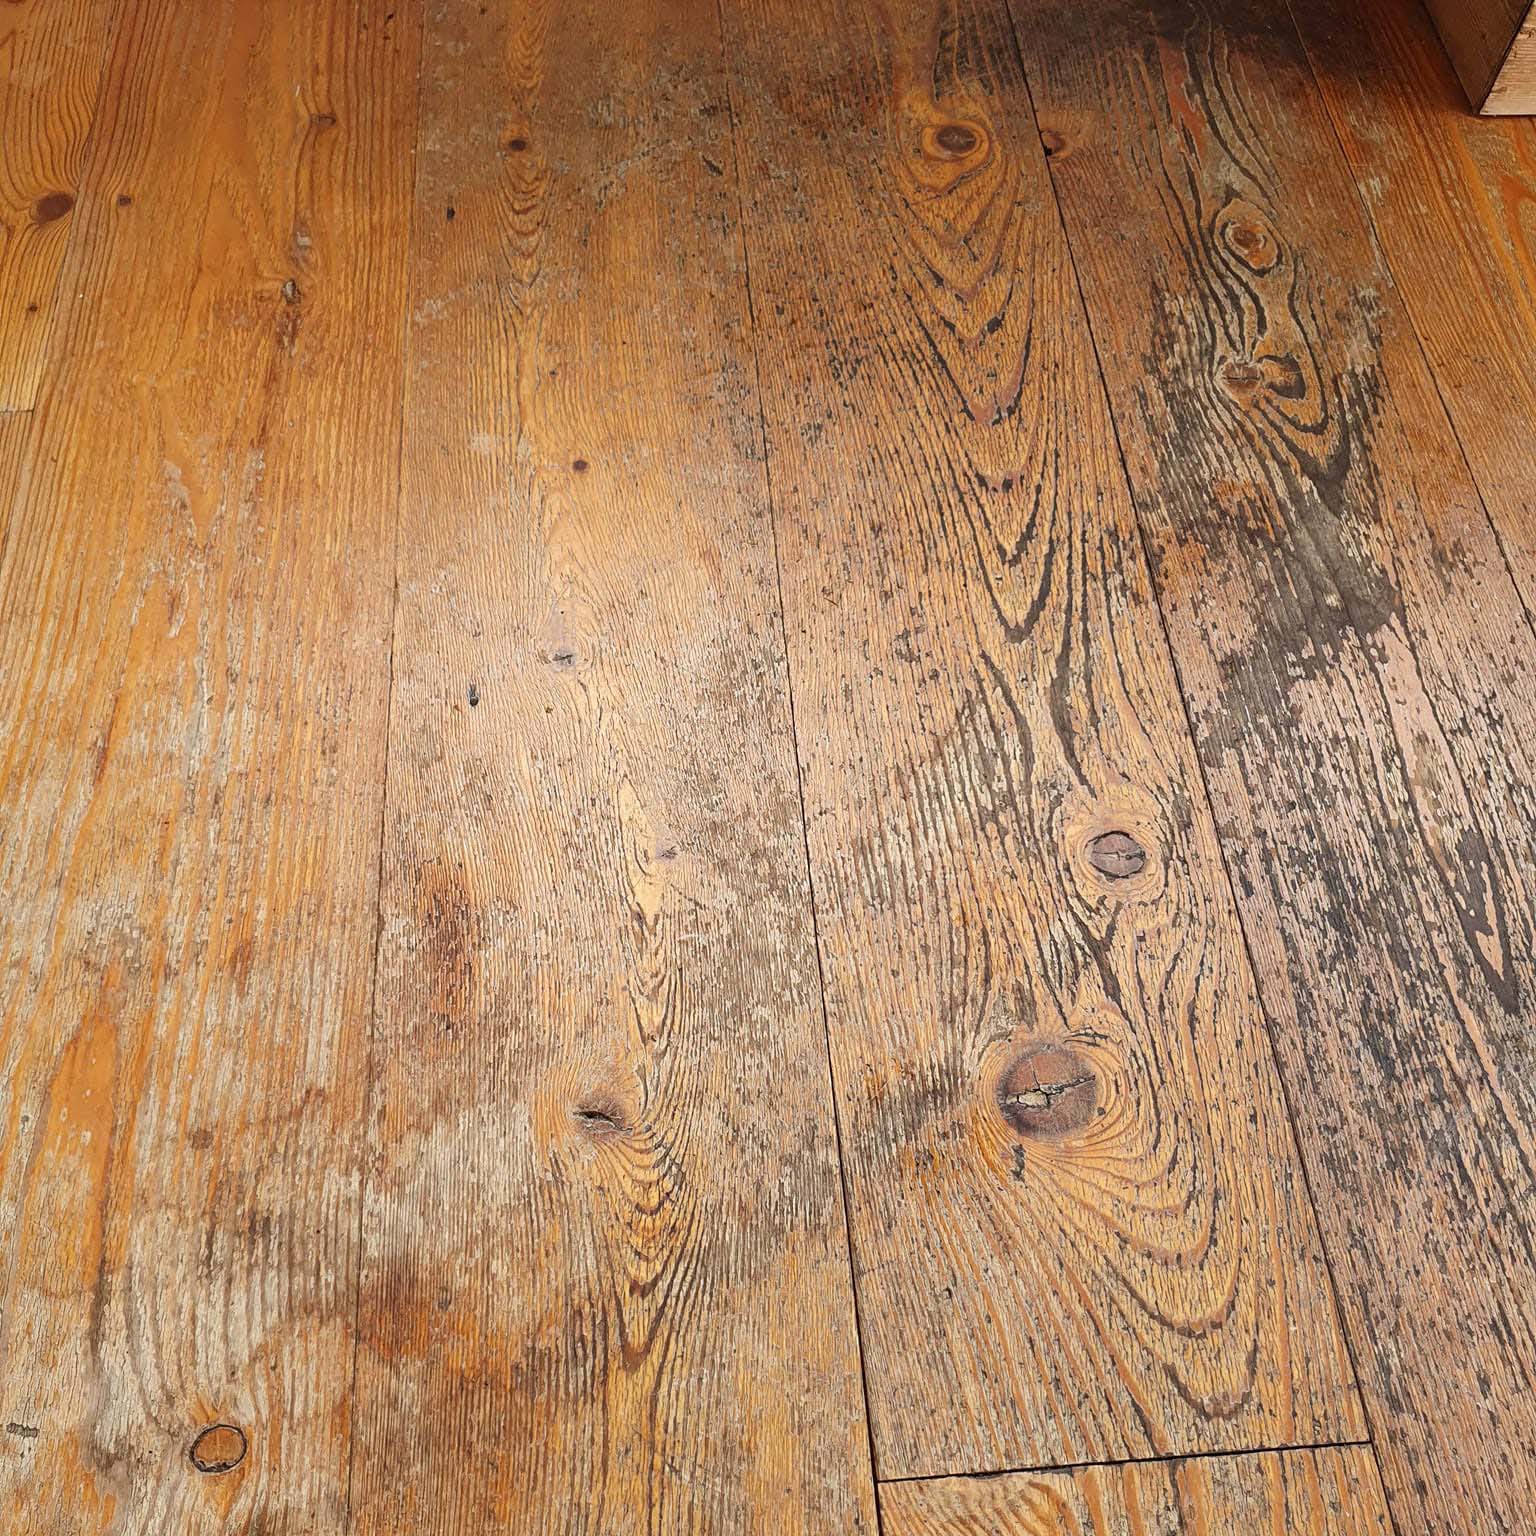 Damaged and faded hard wood floor